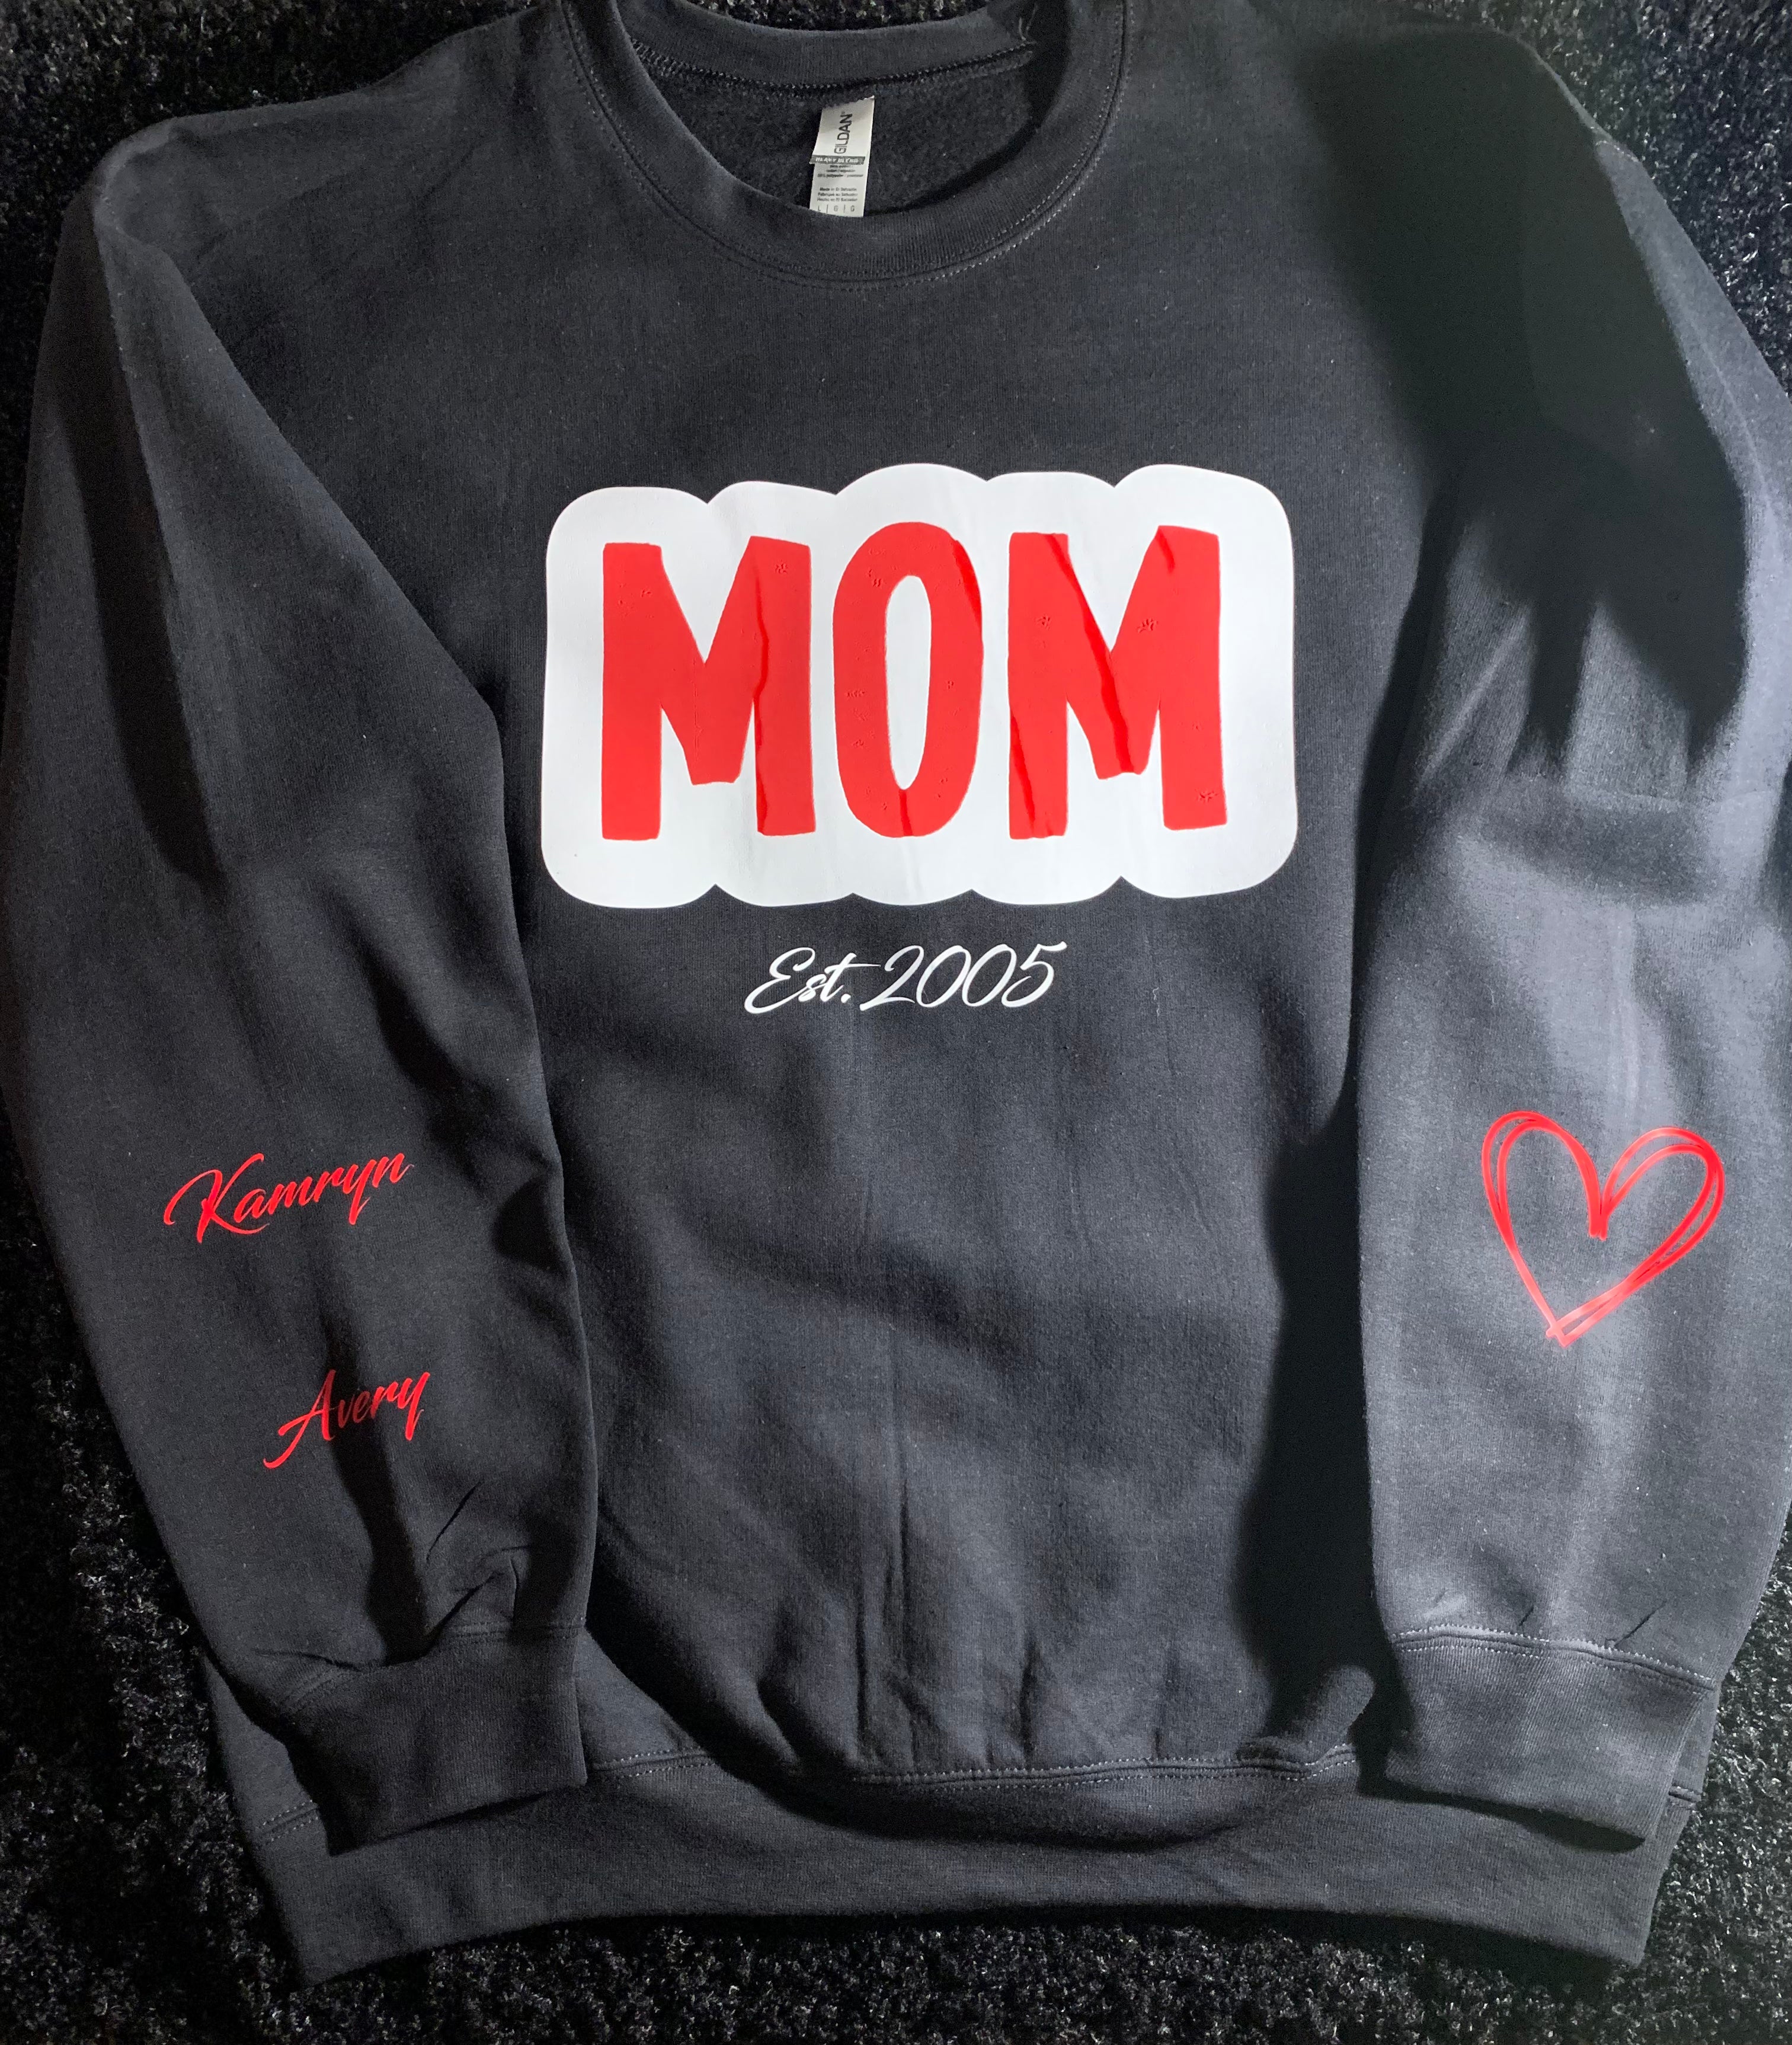 “MOM” sweater